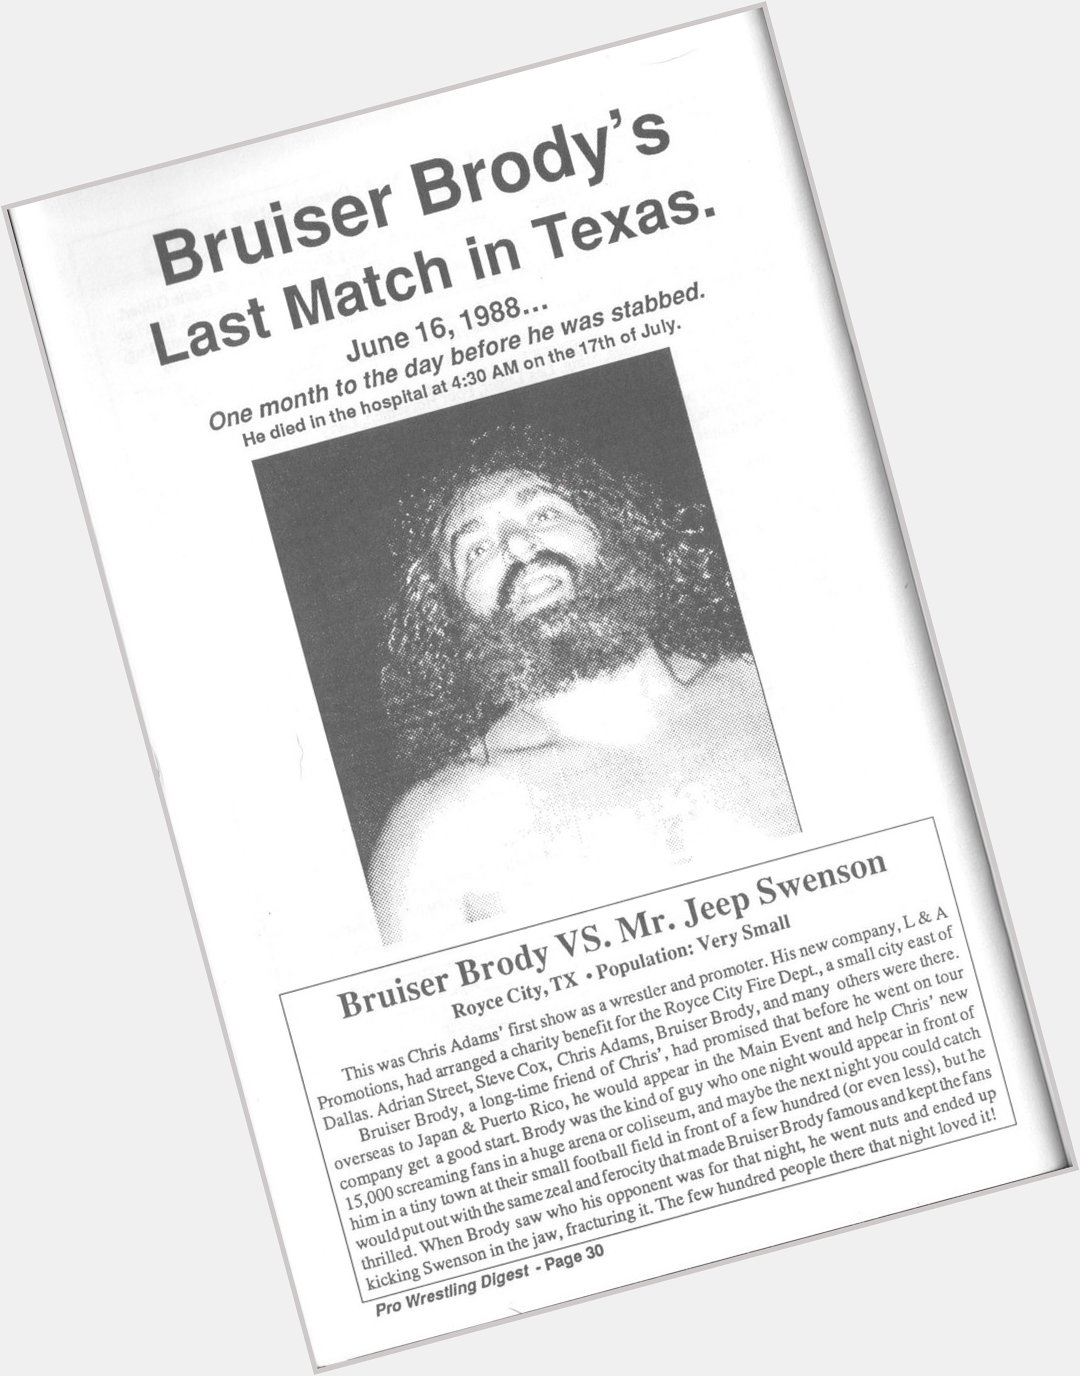 Happy Birthday Bruiser Brody! 